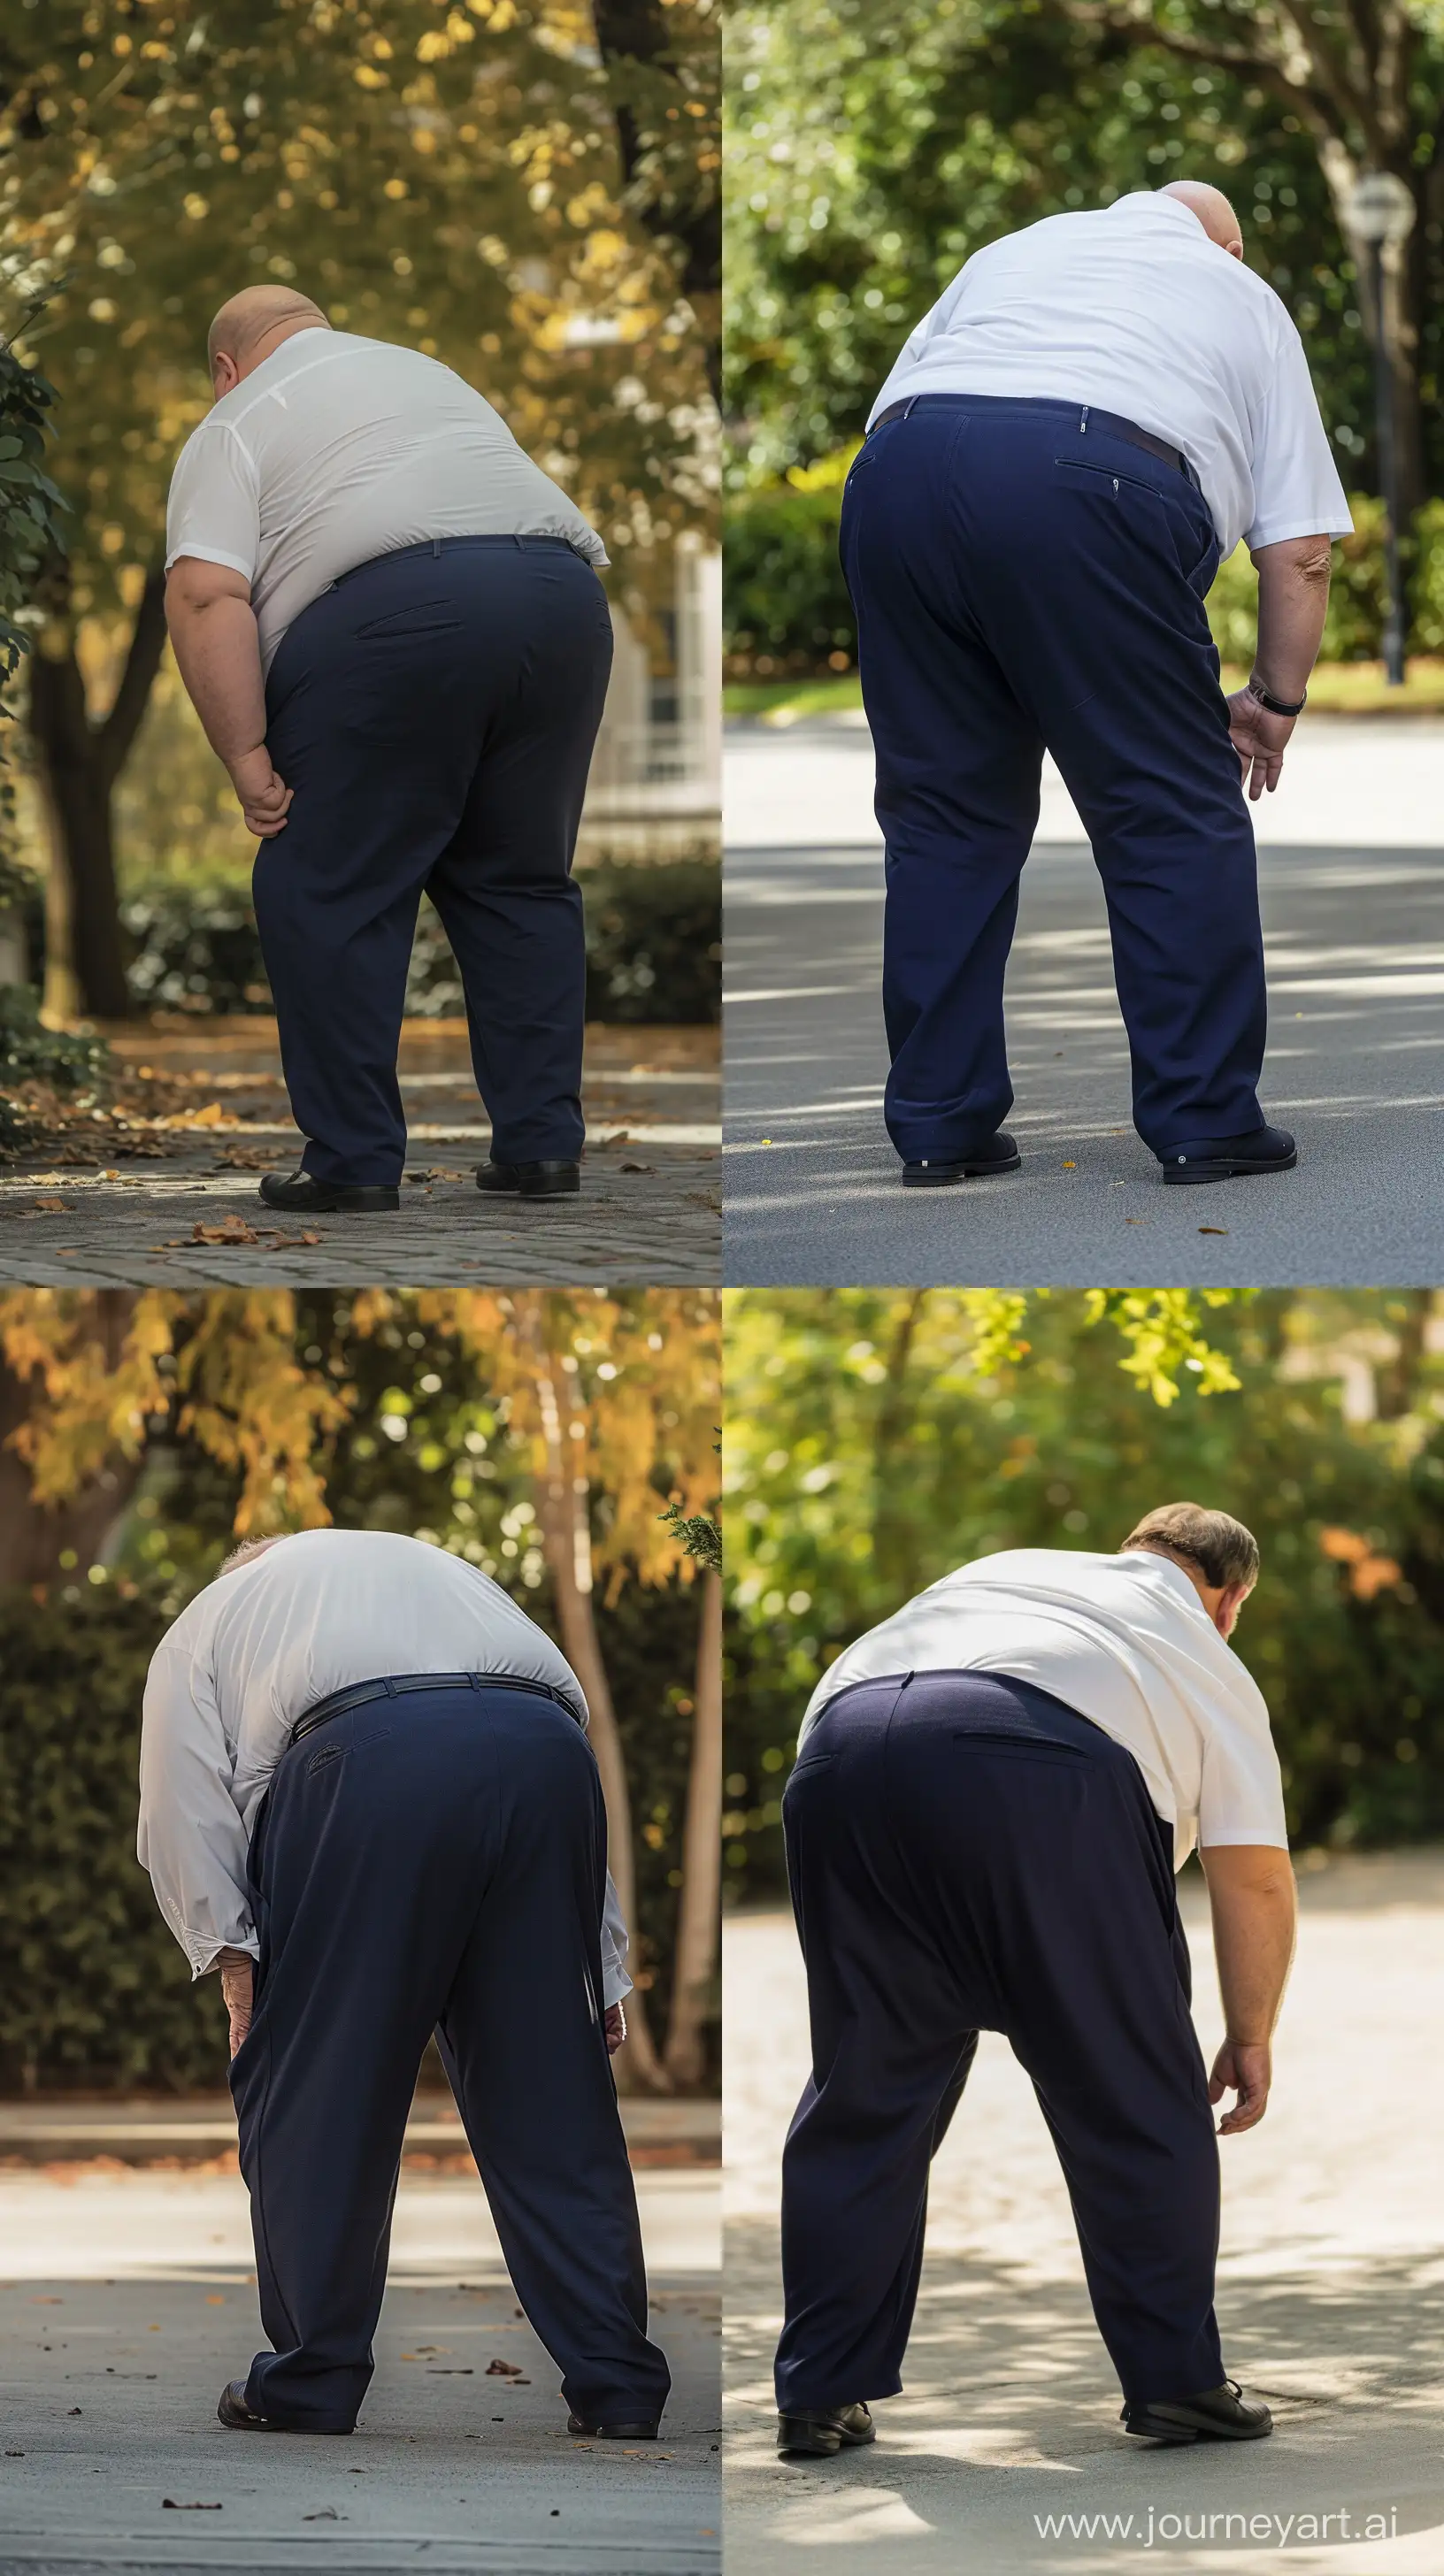 Elderly-Man-in-Outdoor-Activity-Bending-Over-in-Navy-Pants-and-White-Shirt